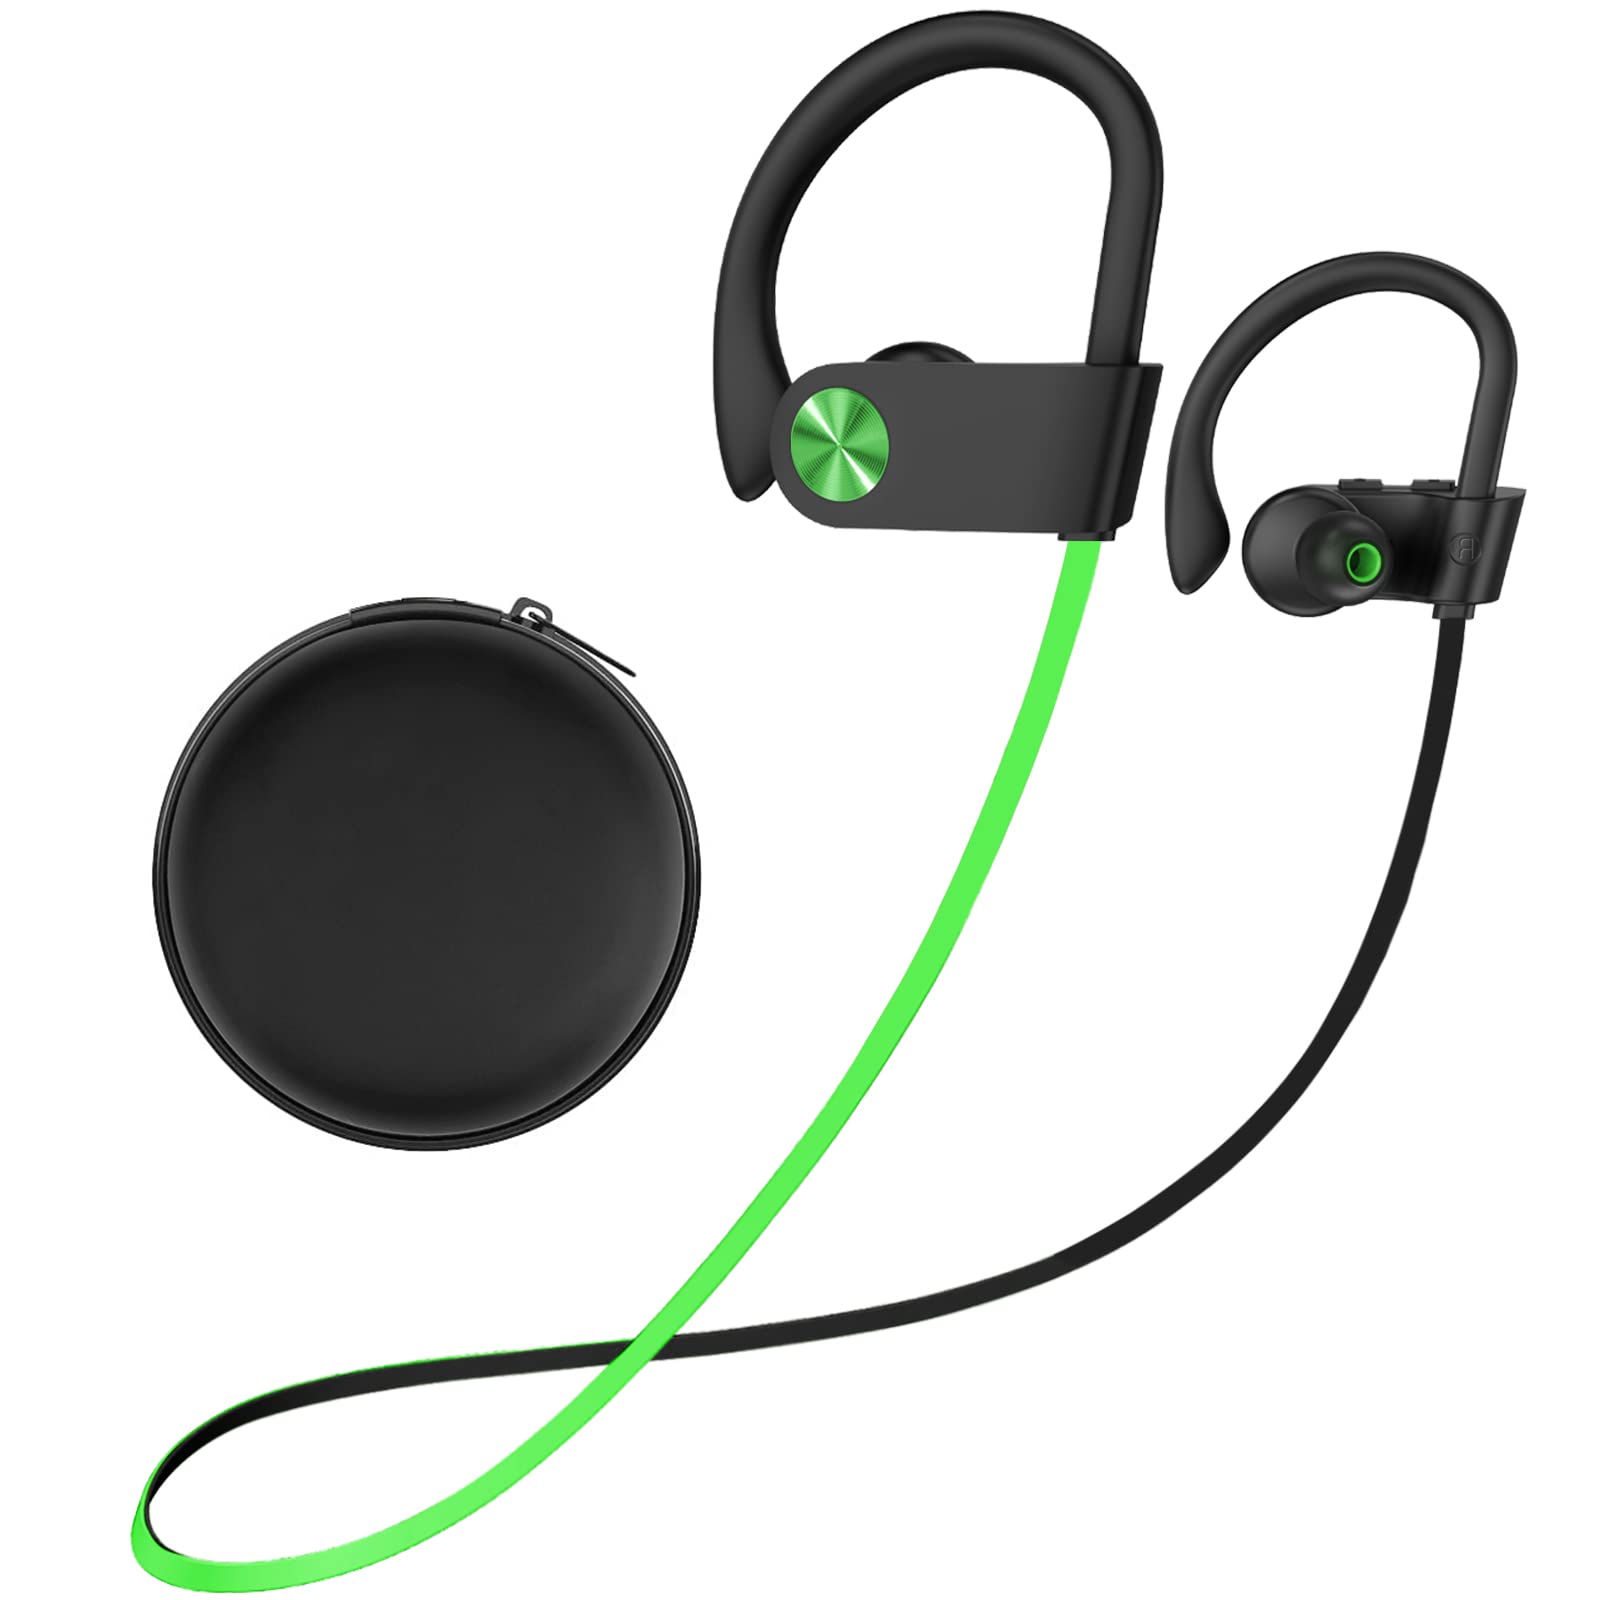 Stiive 蓝牙耳机，无线运动耳塞 IPX7 防水，带麦克风，立体声防汗入耳式耳机，适合健身房跑步锻炼的降噪耳机，播放时间 15 小时 - GreenBlack